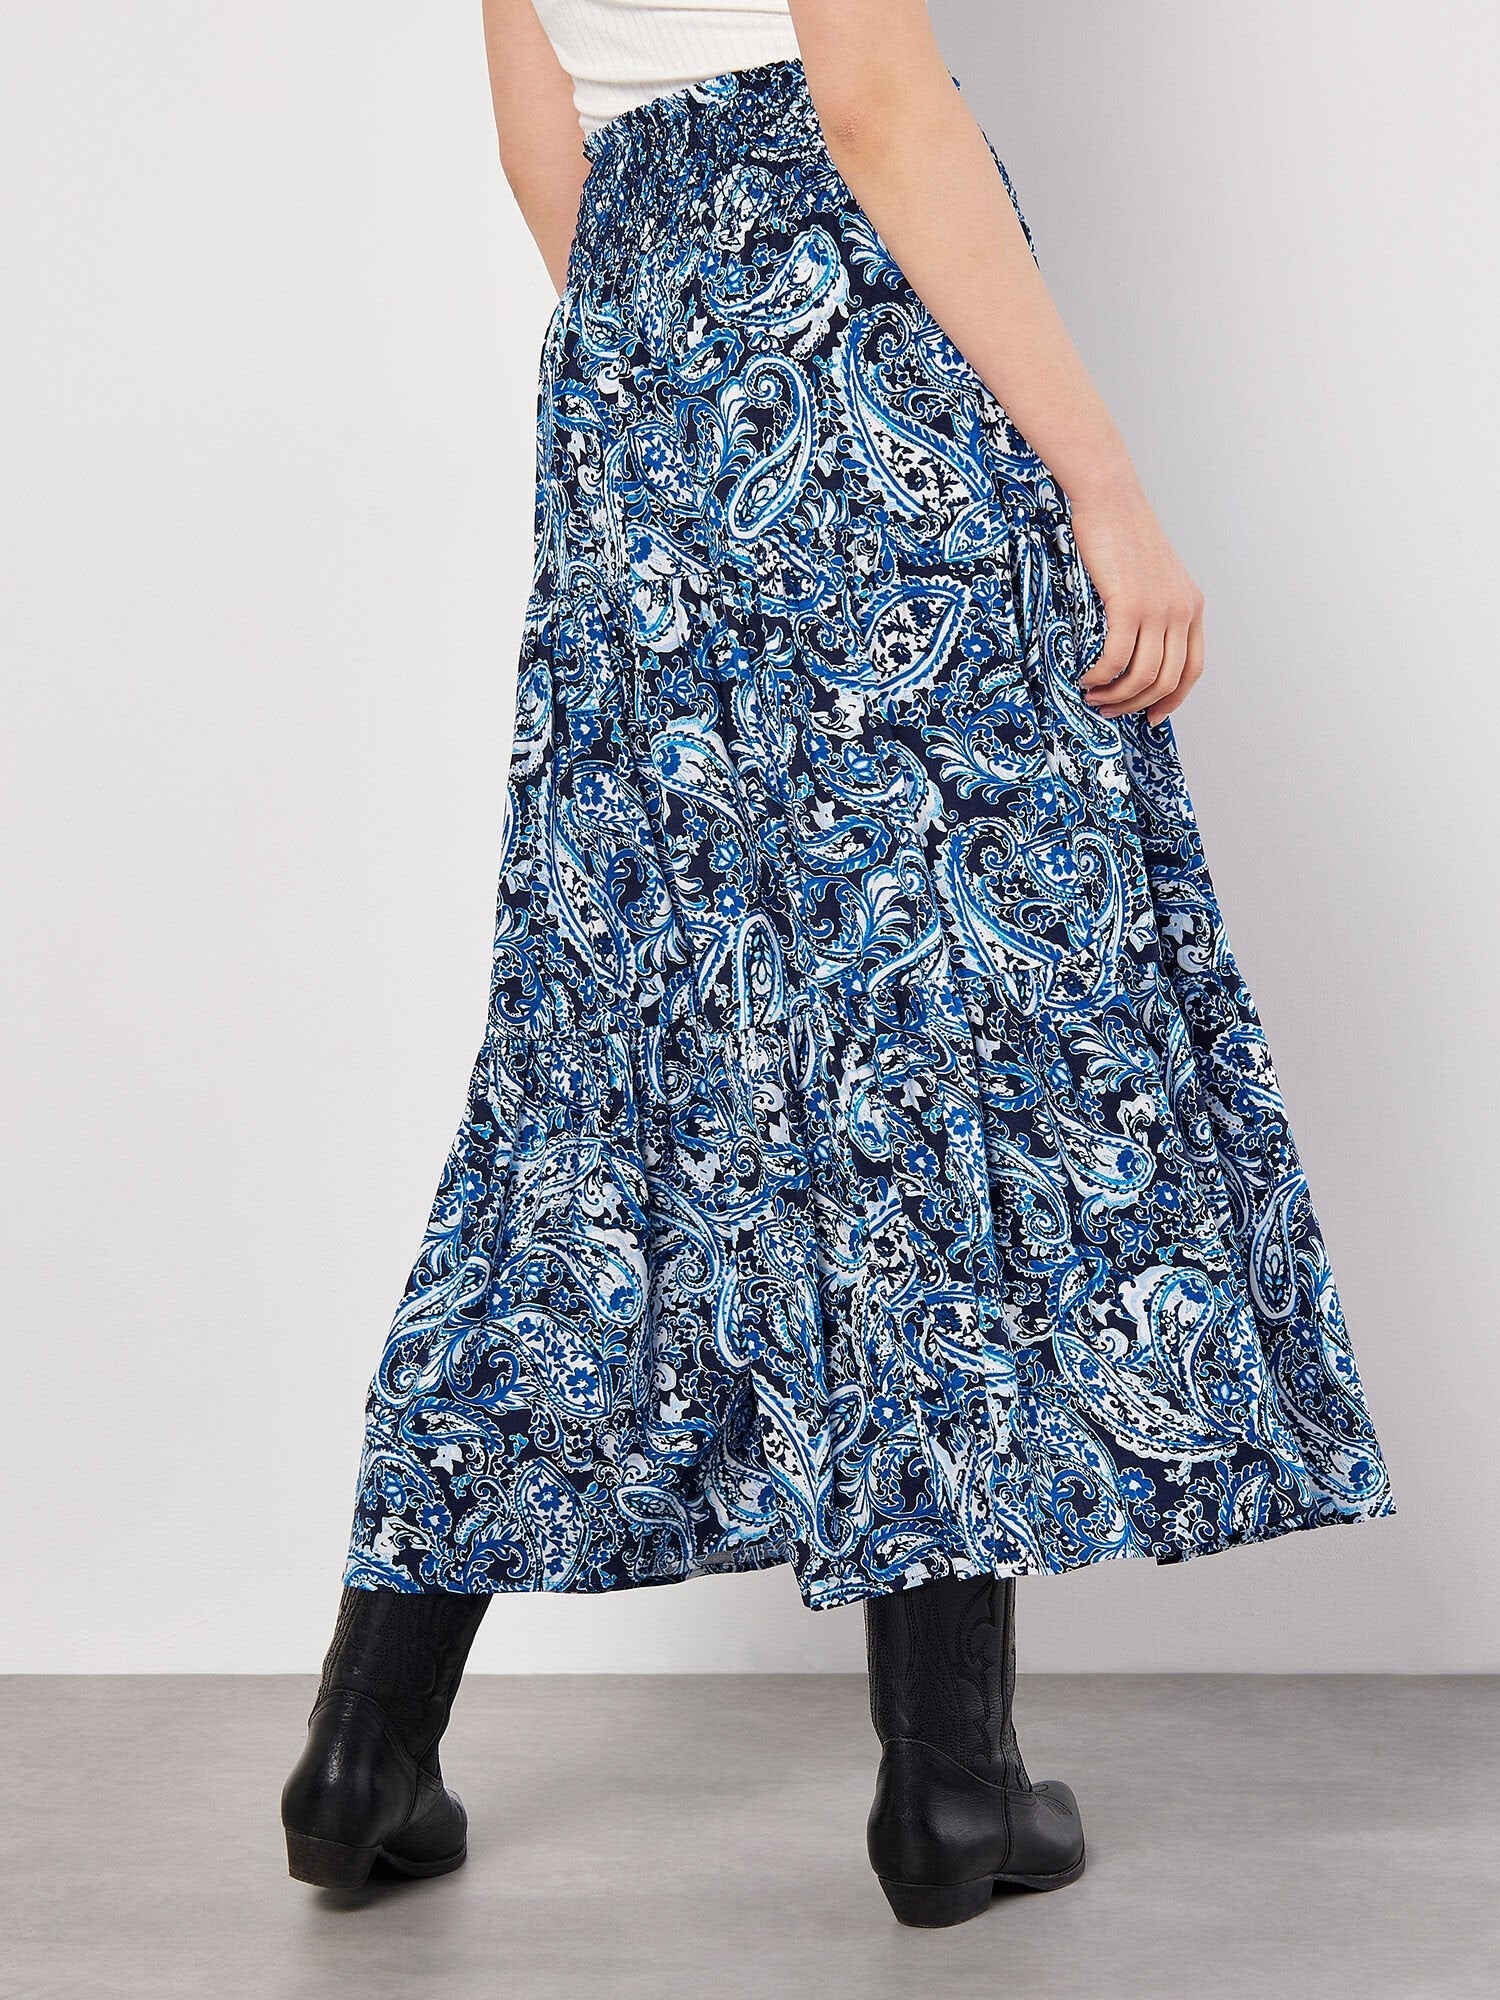 APRICOT - Paisley Tiered Skirt - 831100 - Boutique Bubbles